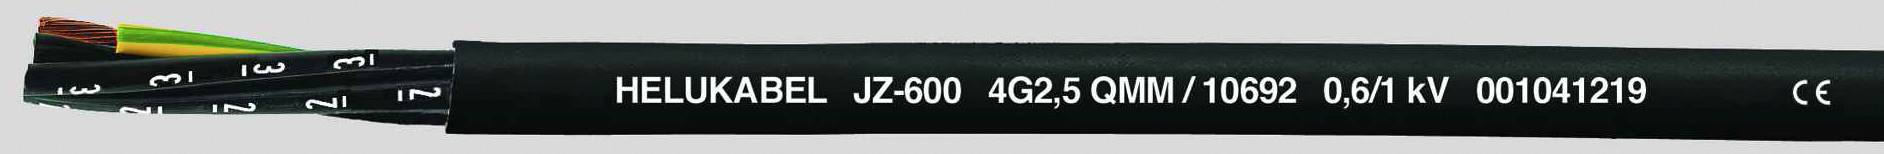 HELUKABEL JZ-600 Steuerleitung 18 G 1 mm² Schwarz 10634-500 500 m